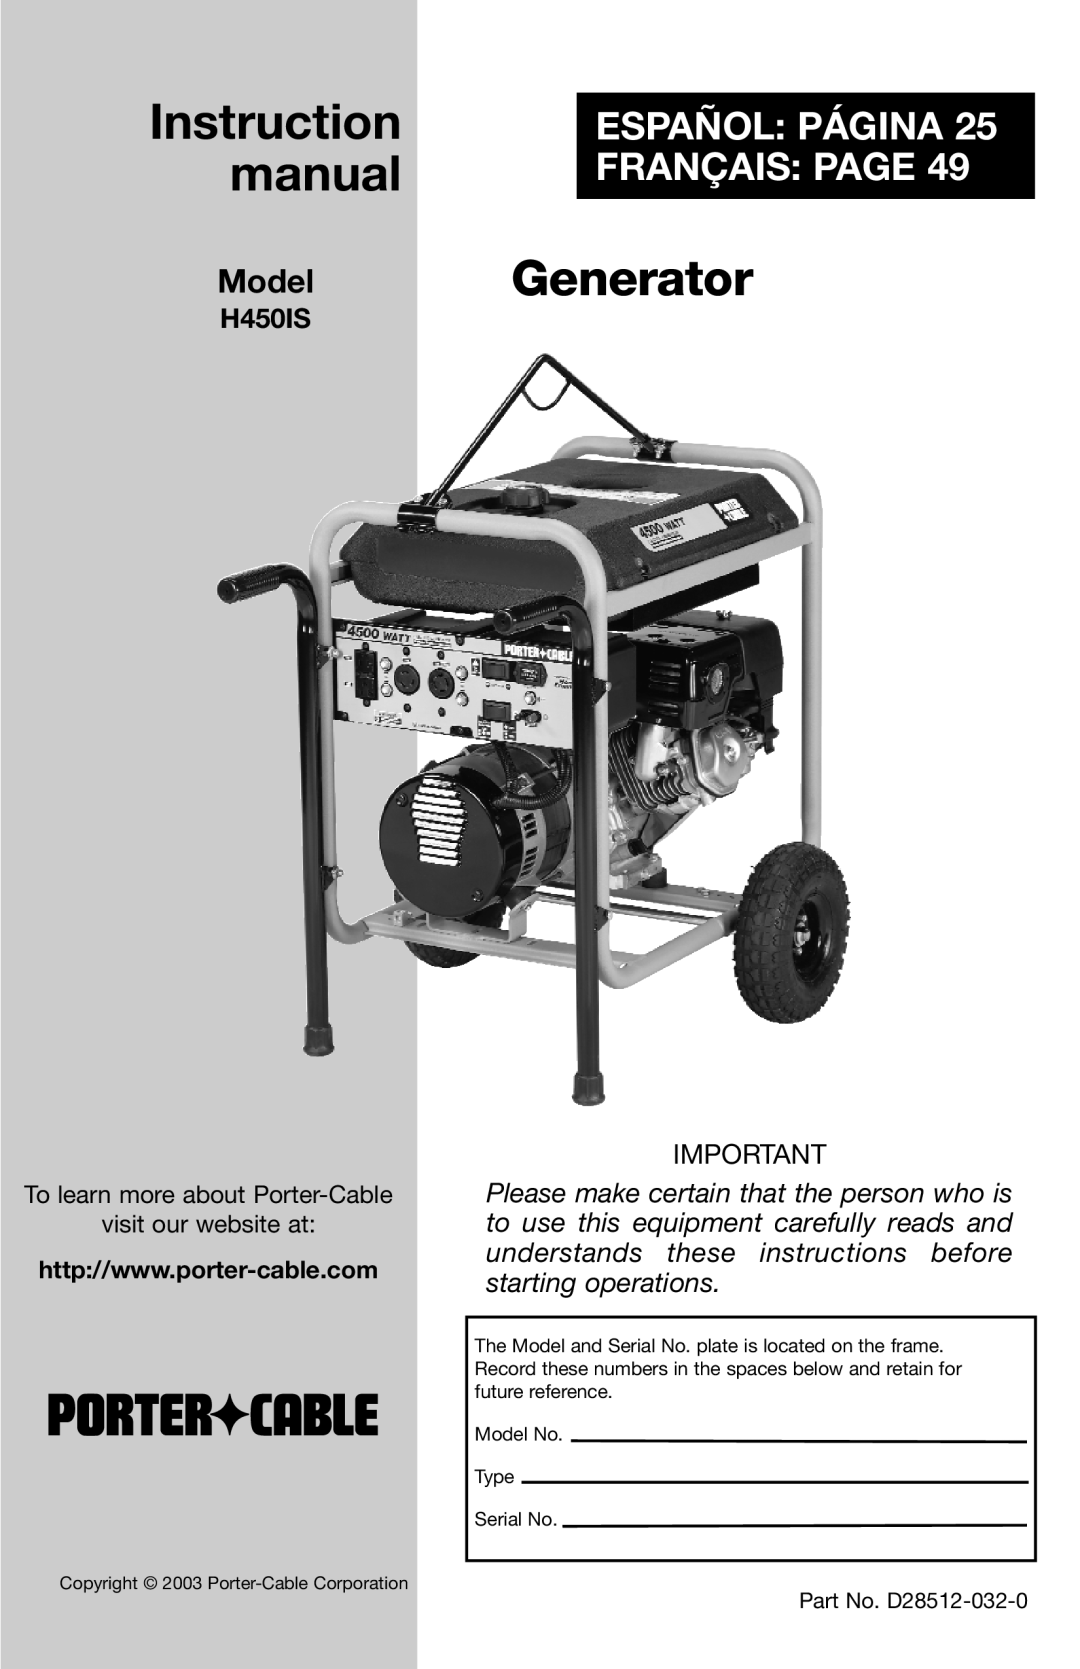 Porter-Cable H450IS instruction manual Instruction manual, Generator, Español: Página Français: Page, Model 